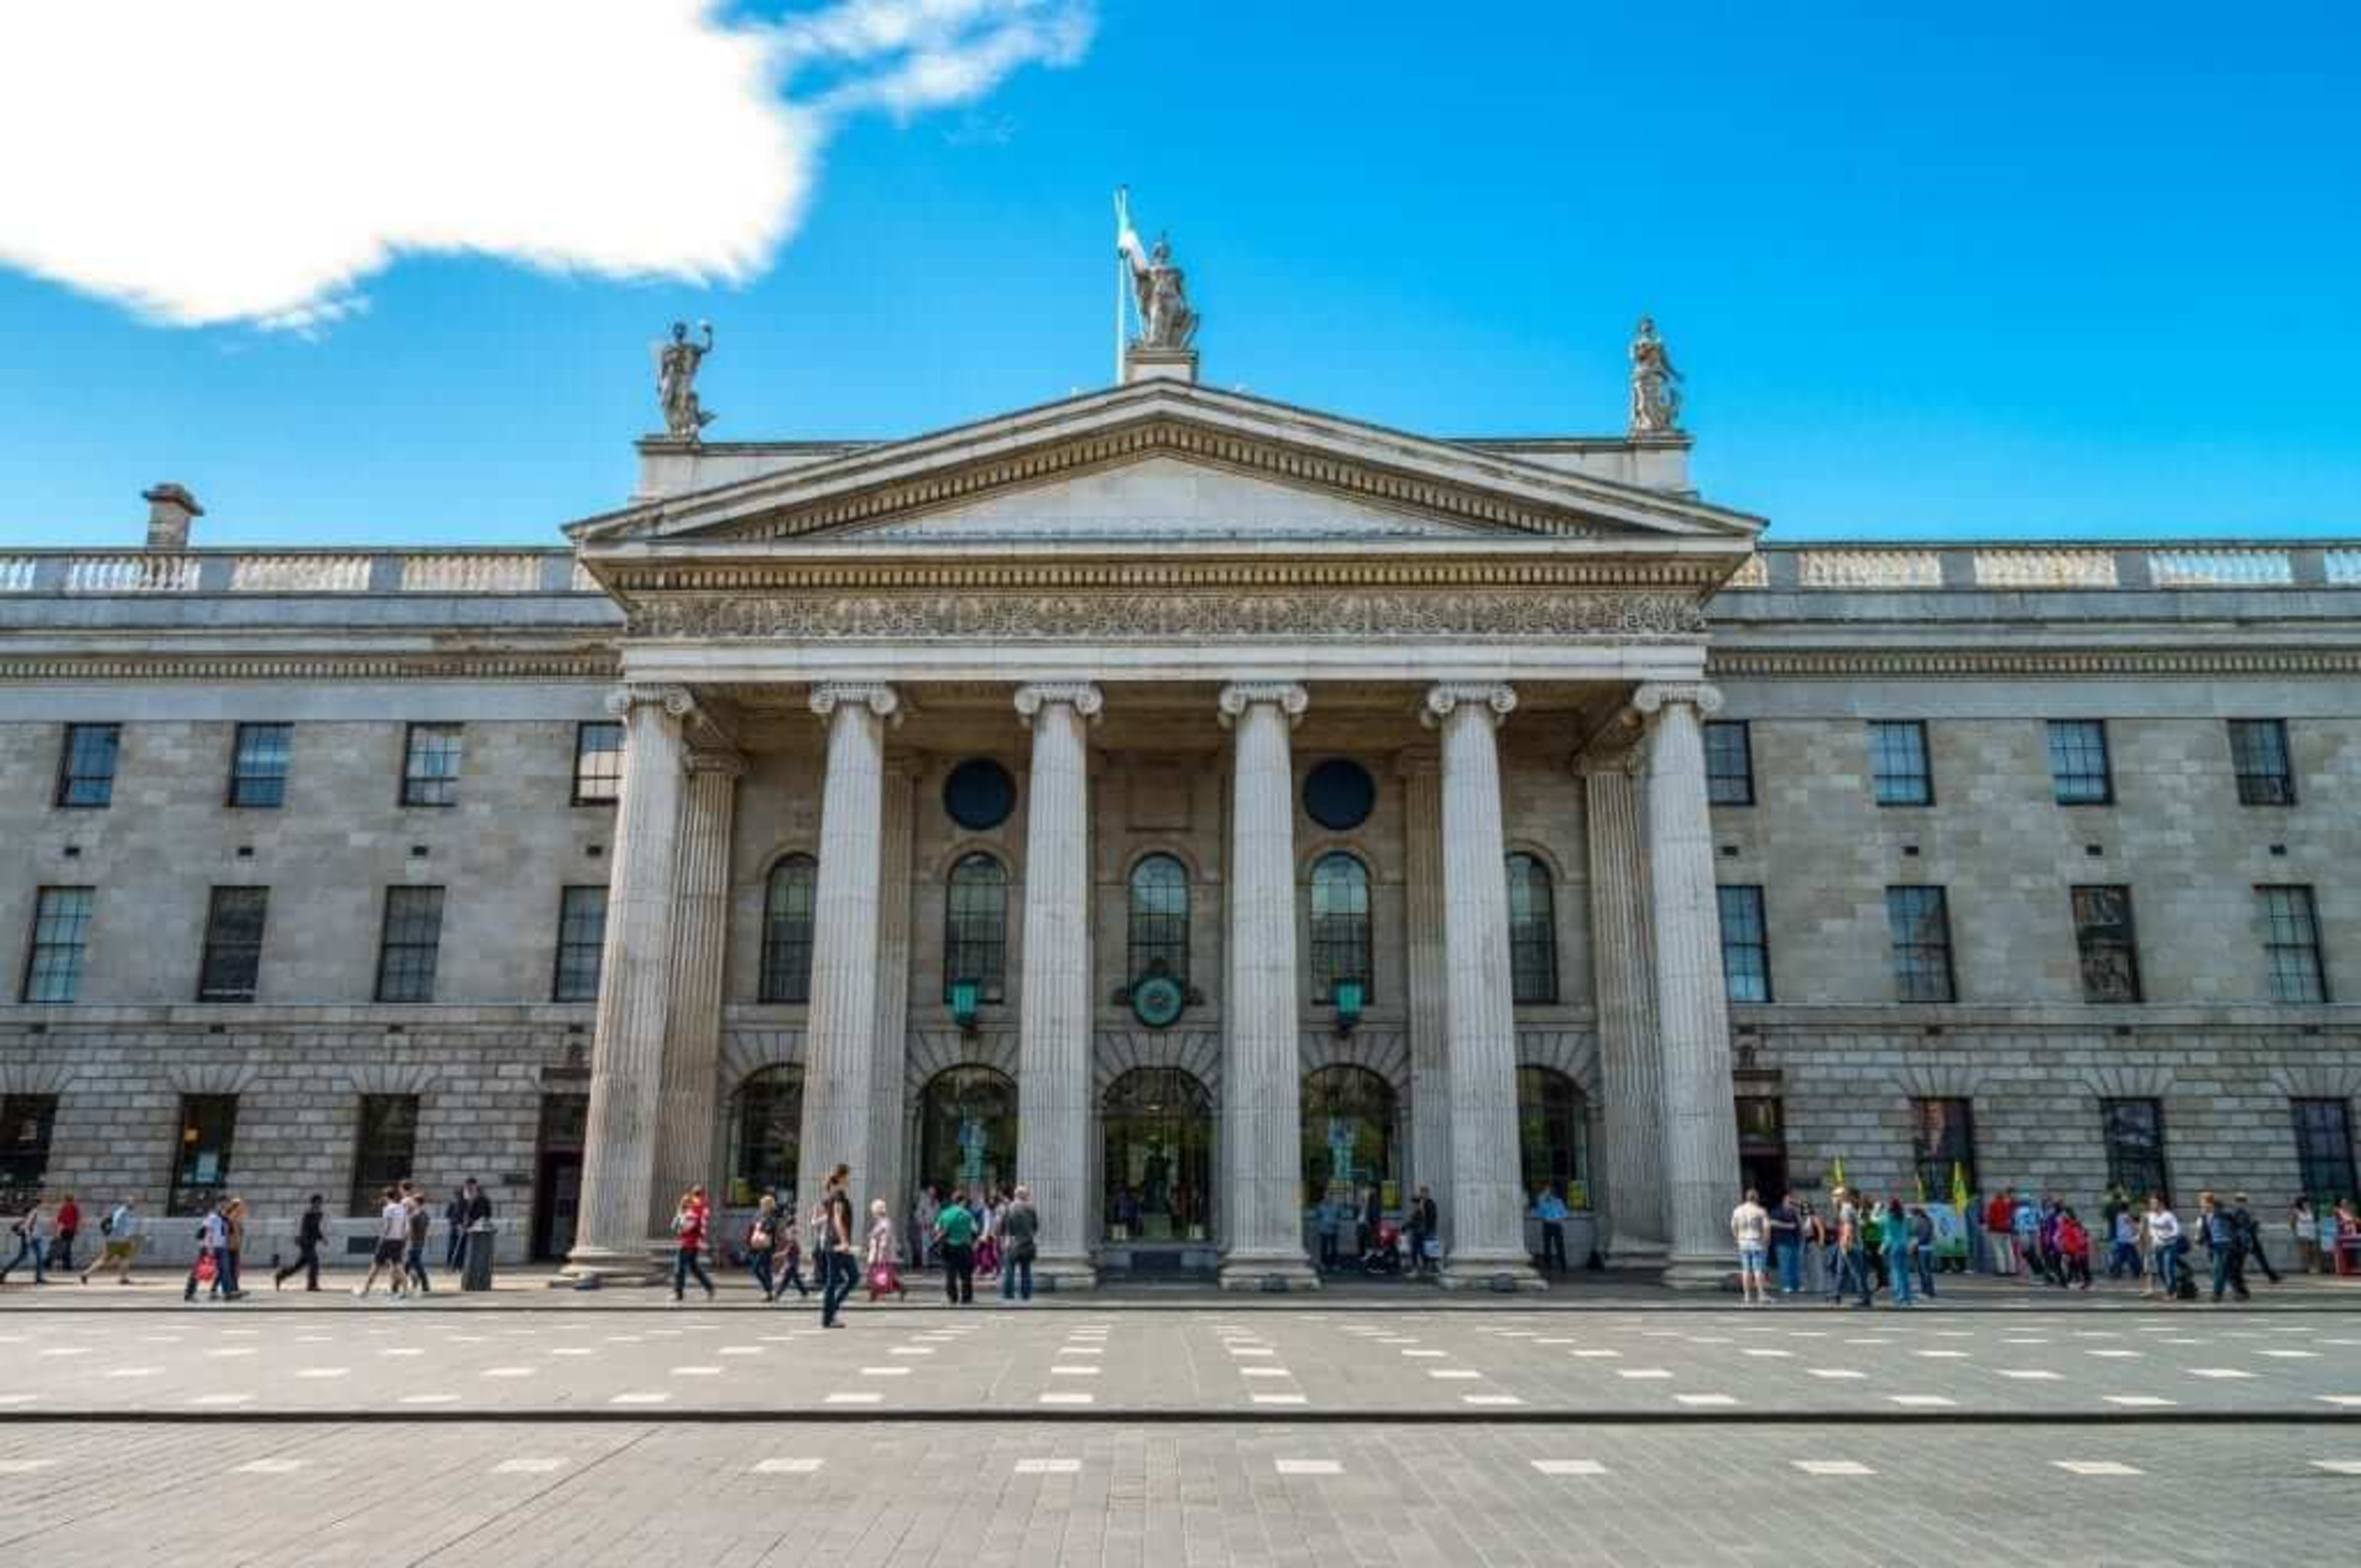 Dublin GPO (General Post Office) Museum